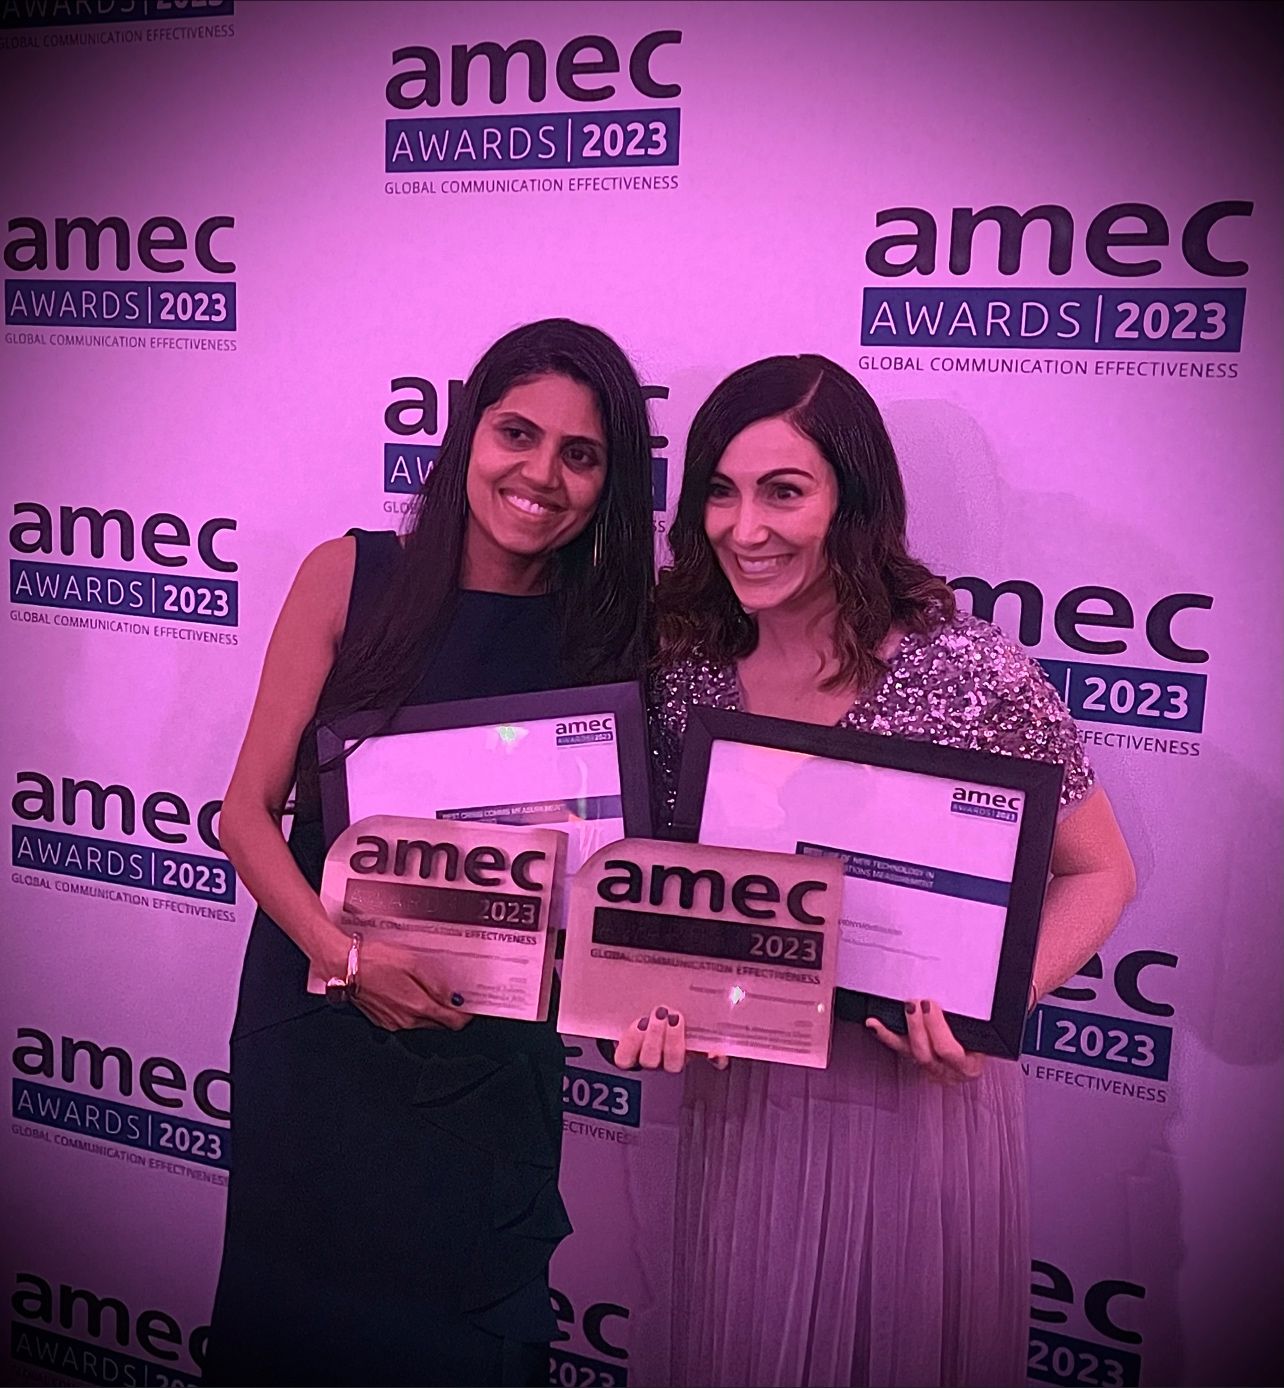 AMEC Awards 2023